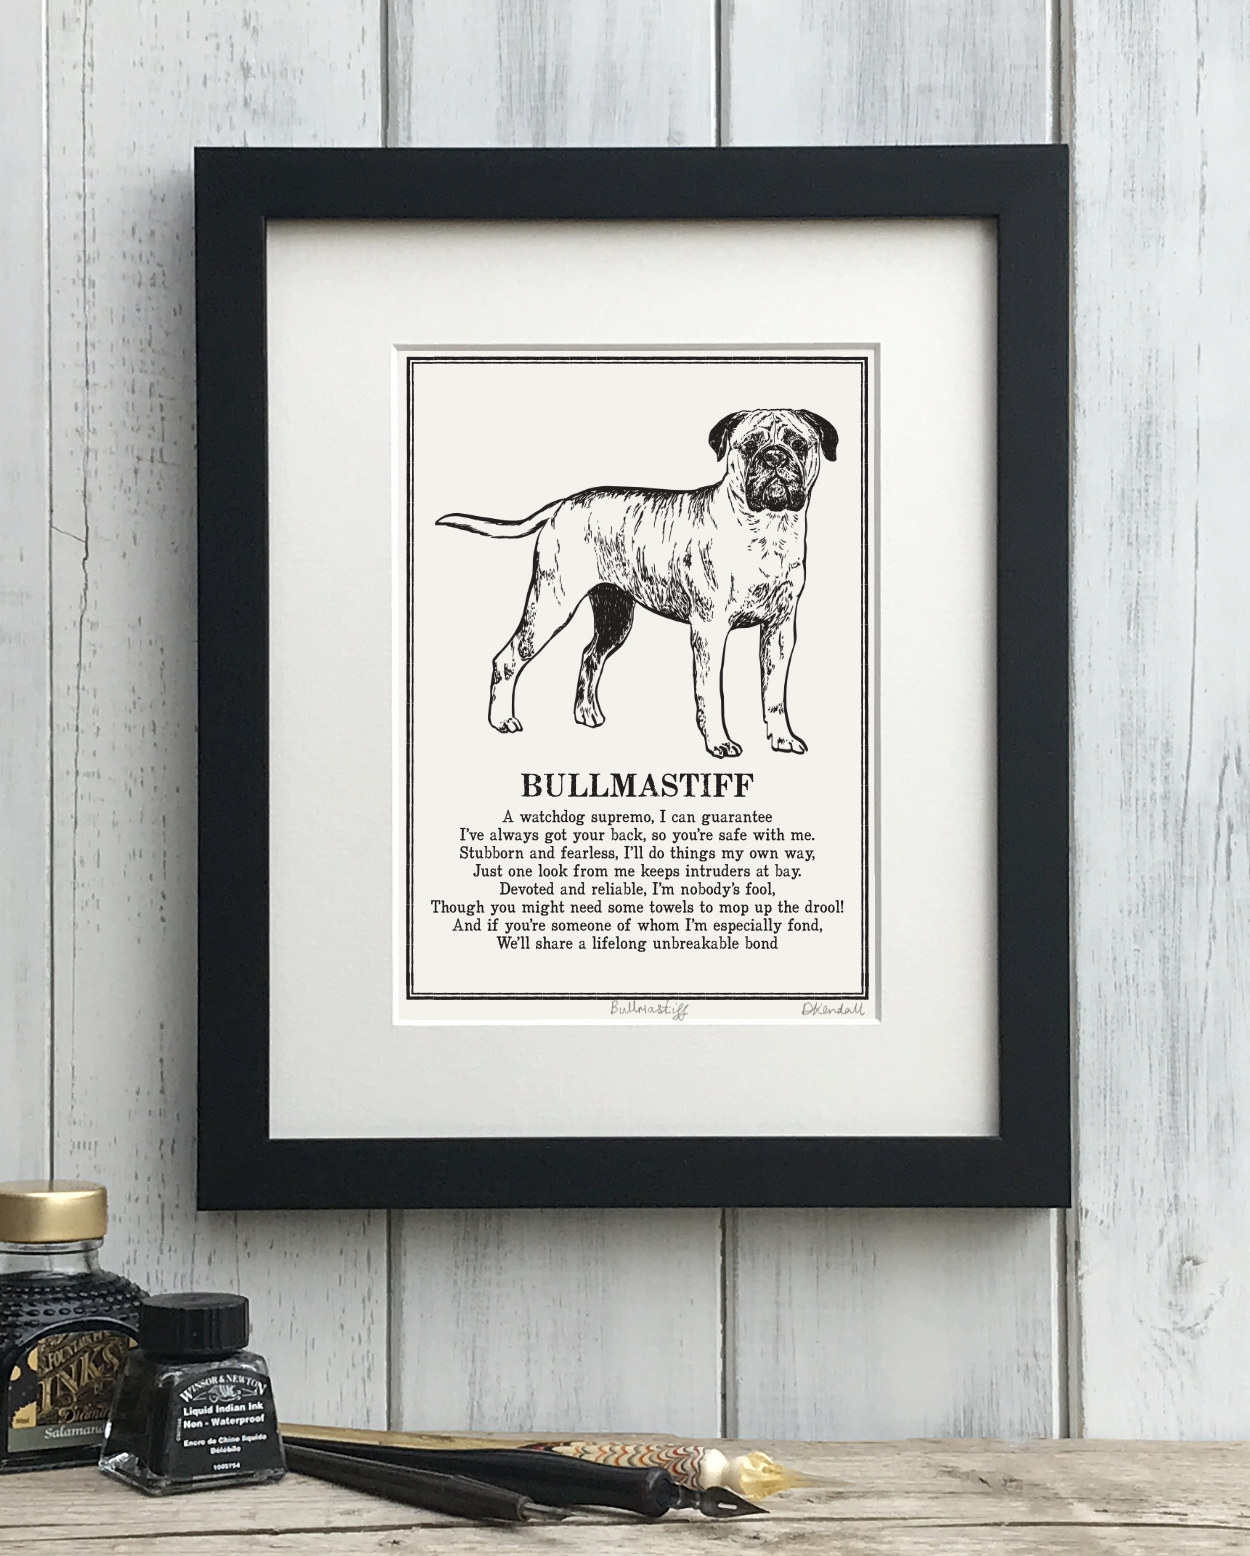 Bullmastiff Doggerel Illustrated Poem Art Print | The Enlightened Hound